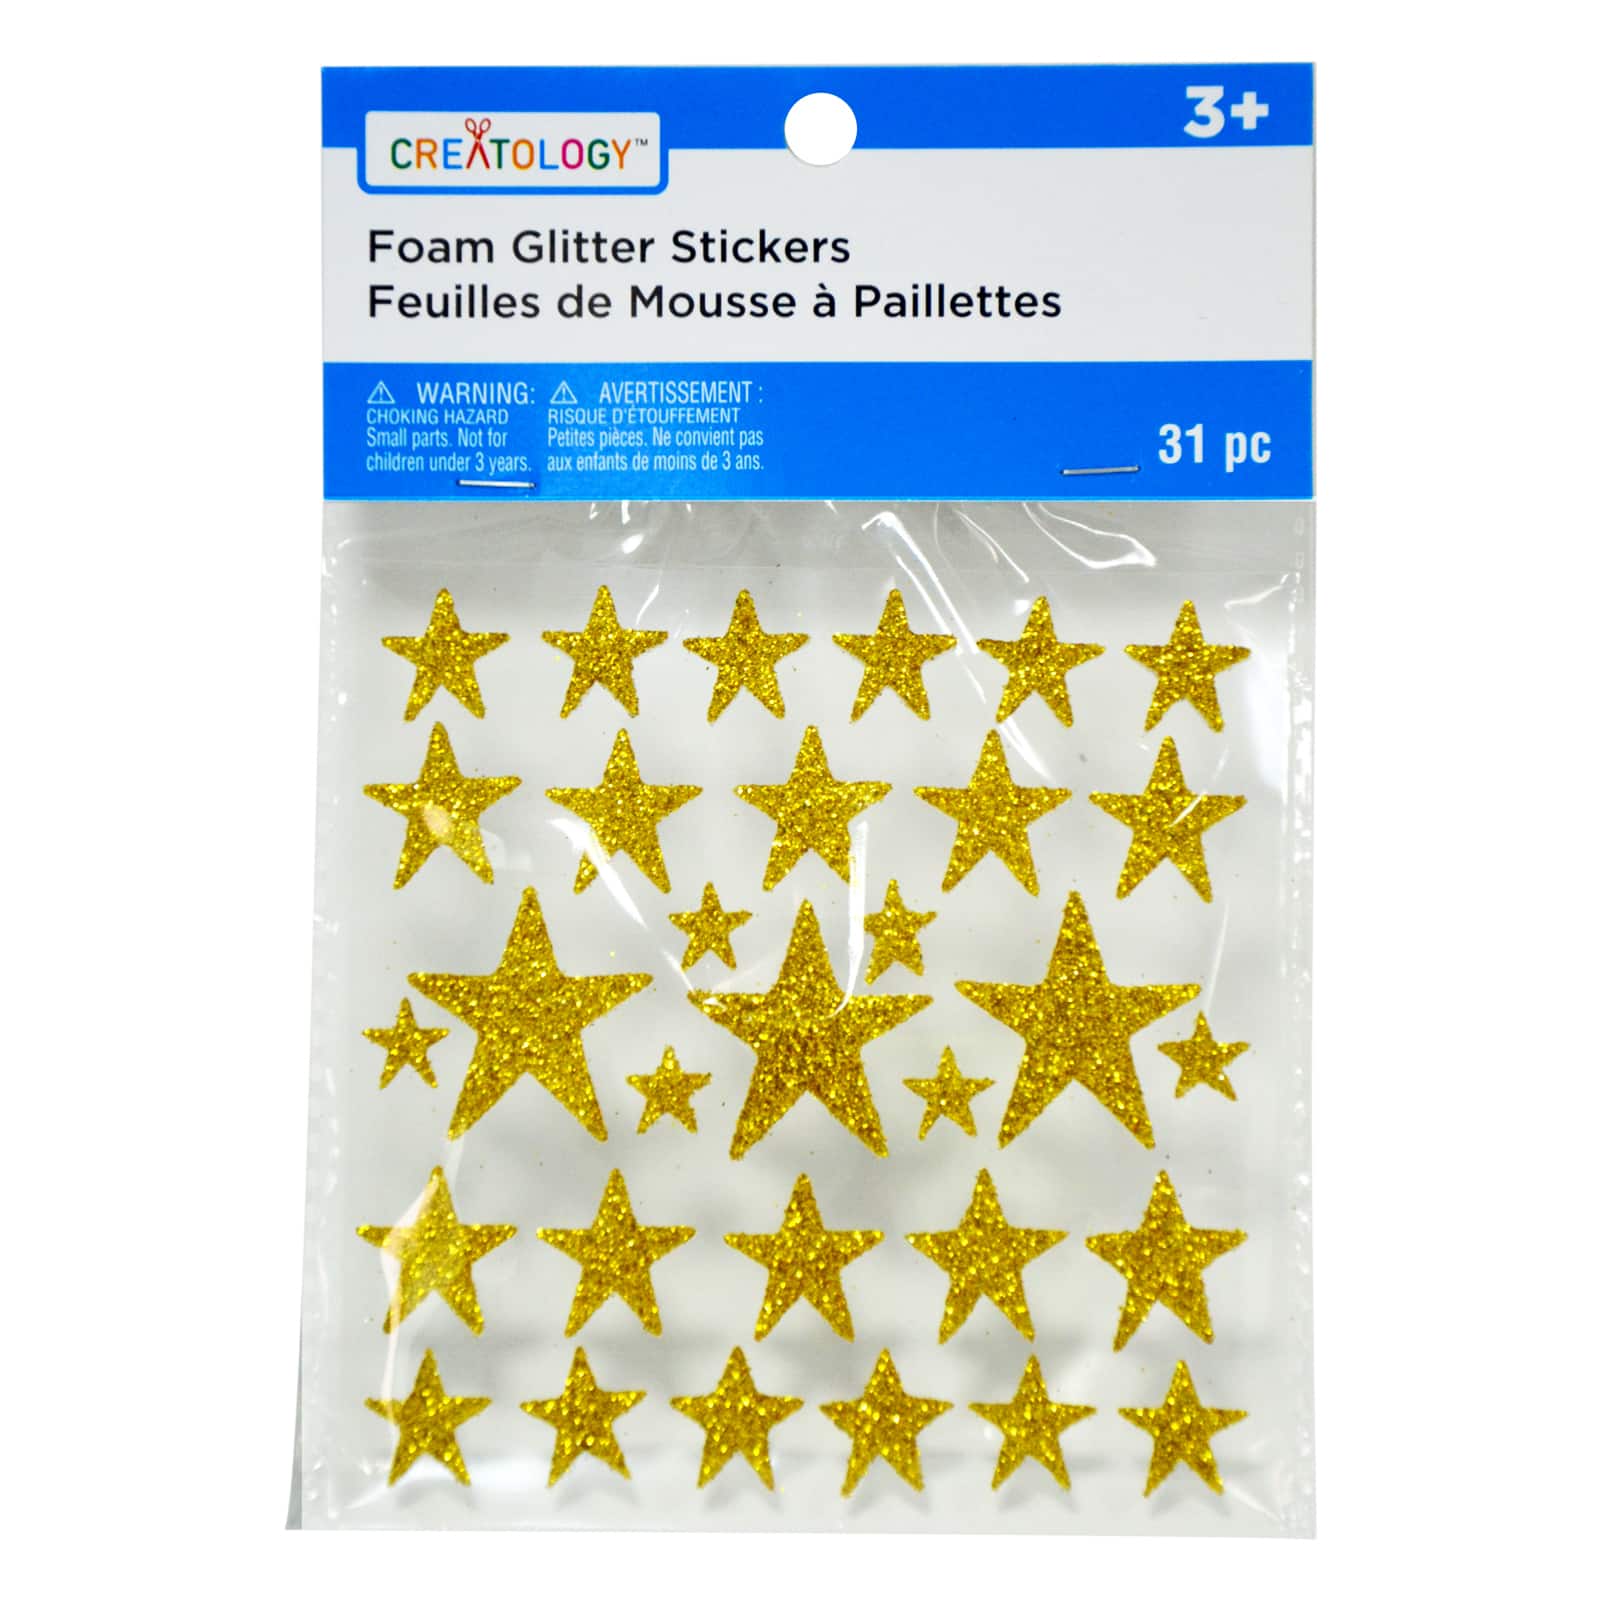 12 Packs: 150 ct. (1,800 total) Glitter Star Foam Stickers by